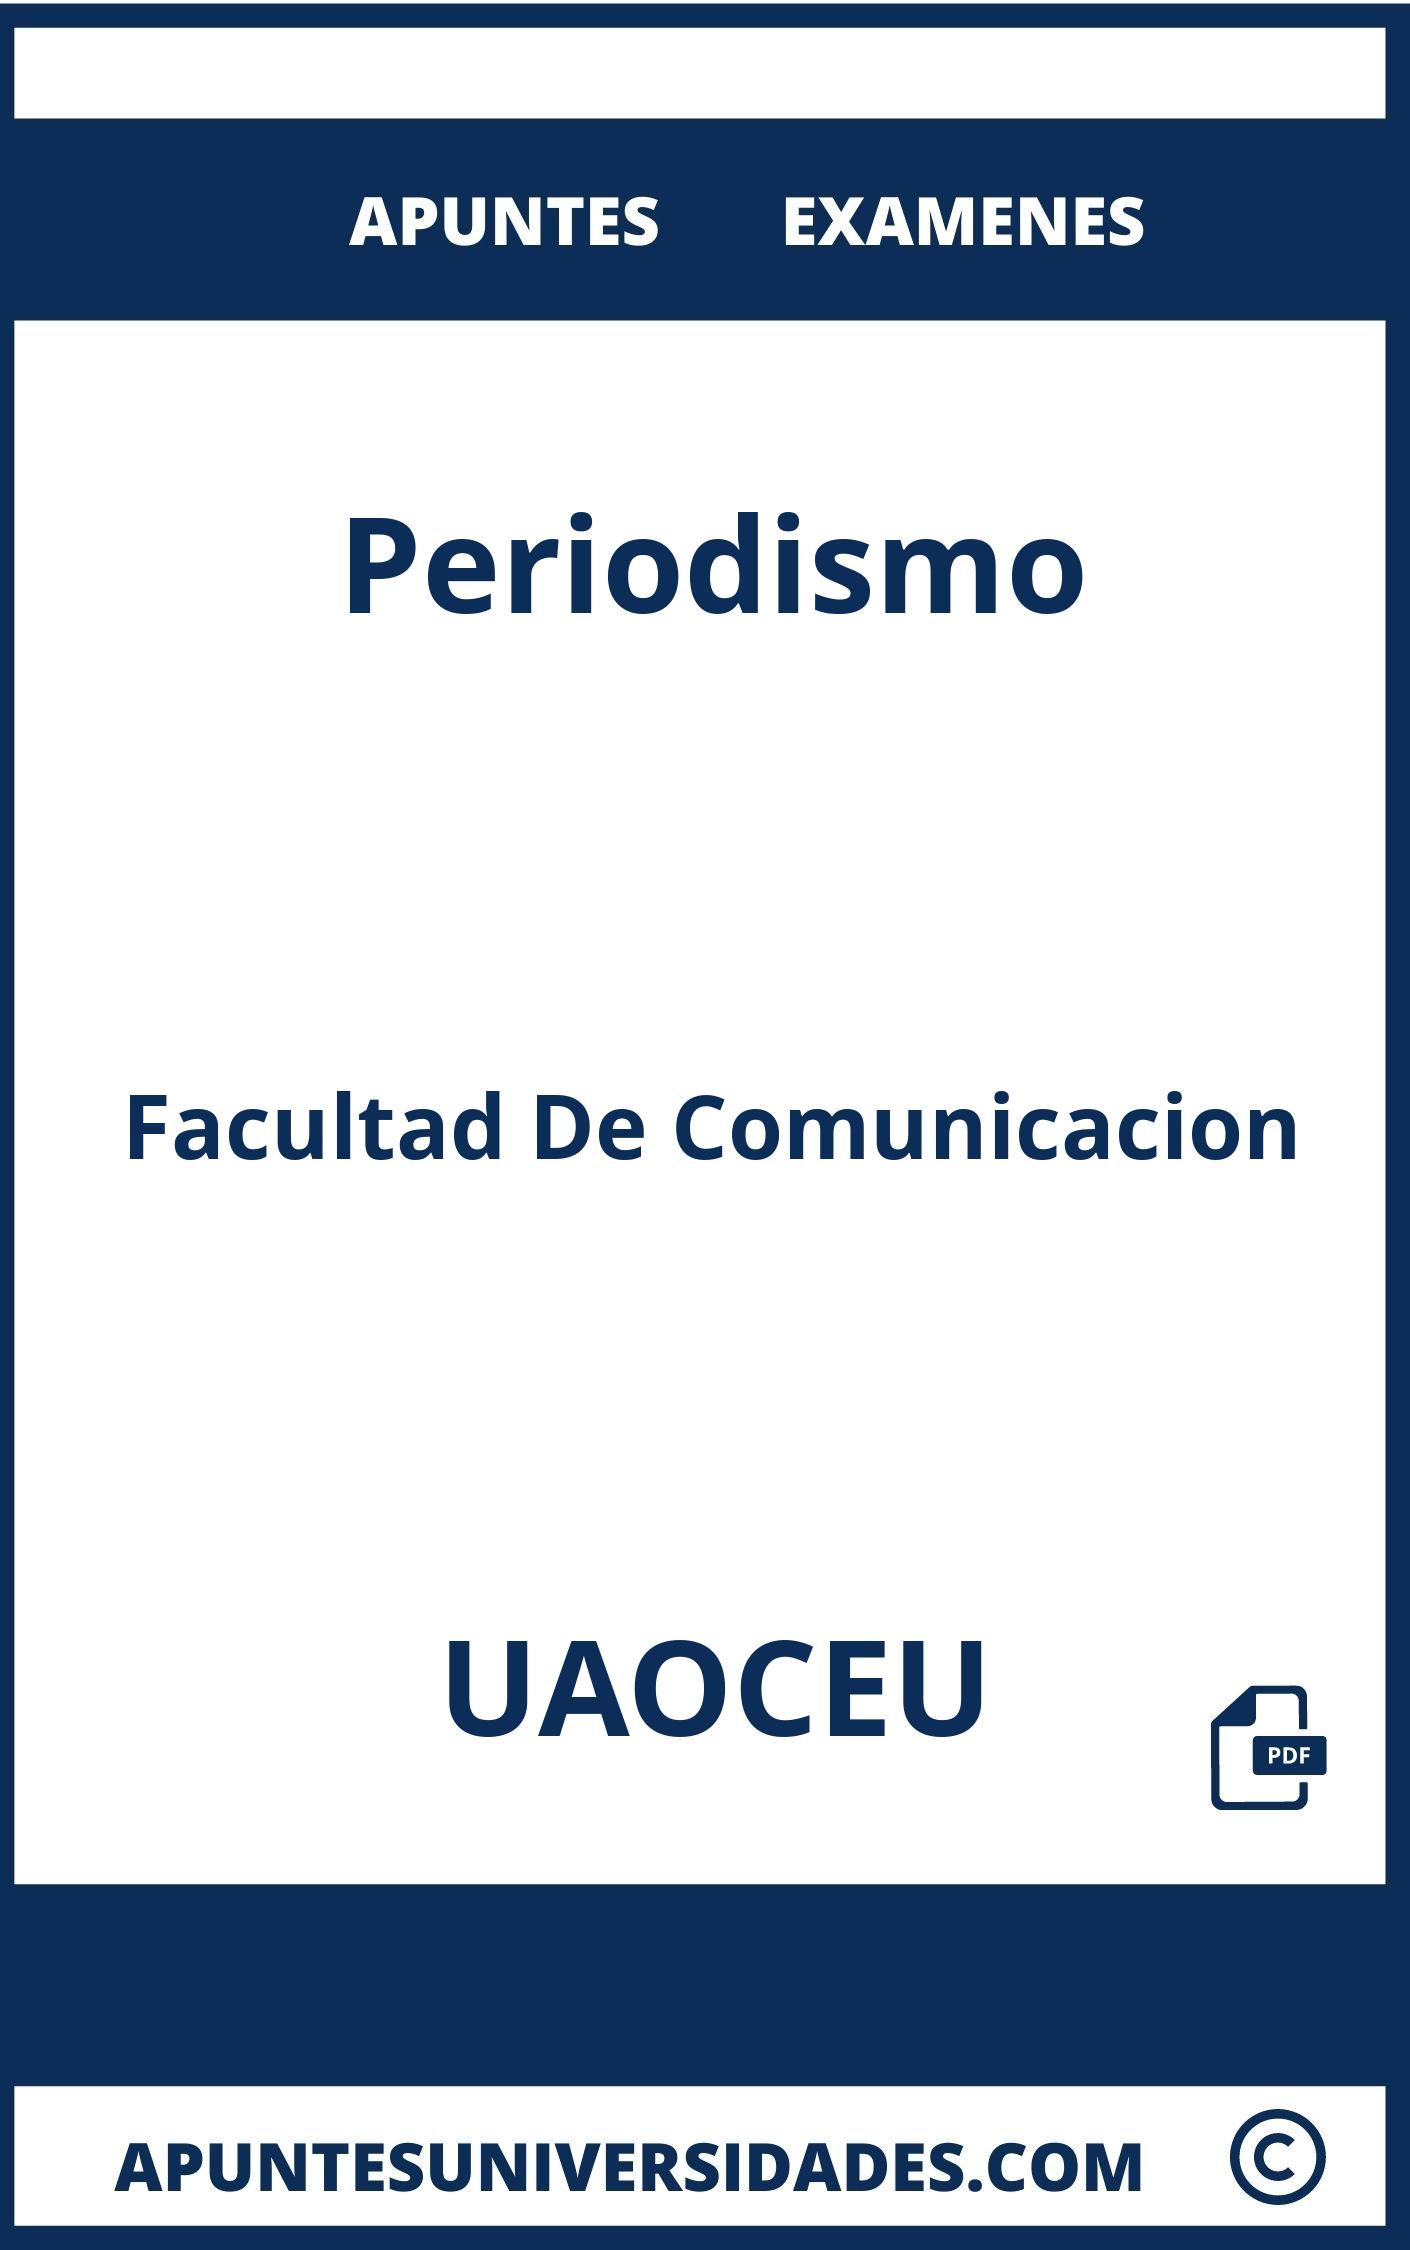 Apuntes Examenes Periodismo UAOCEU